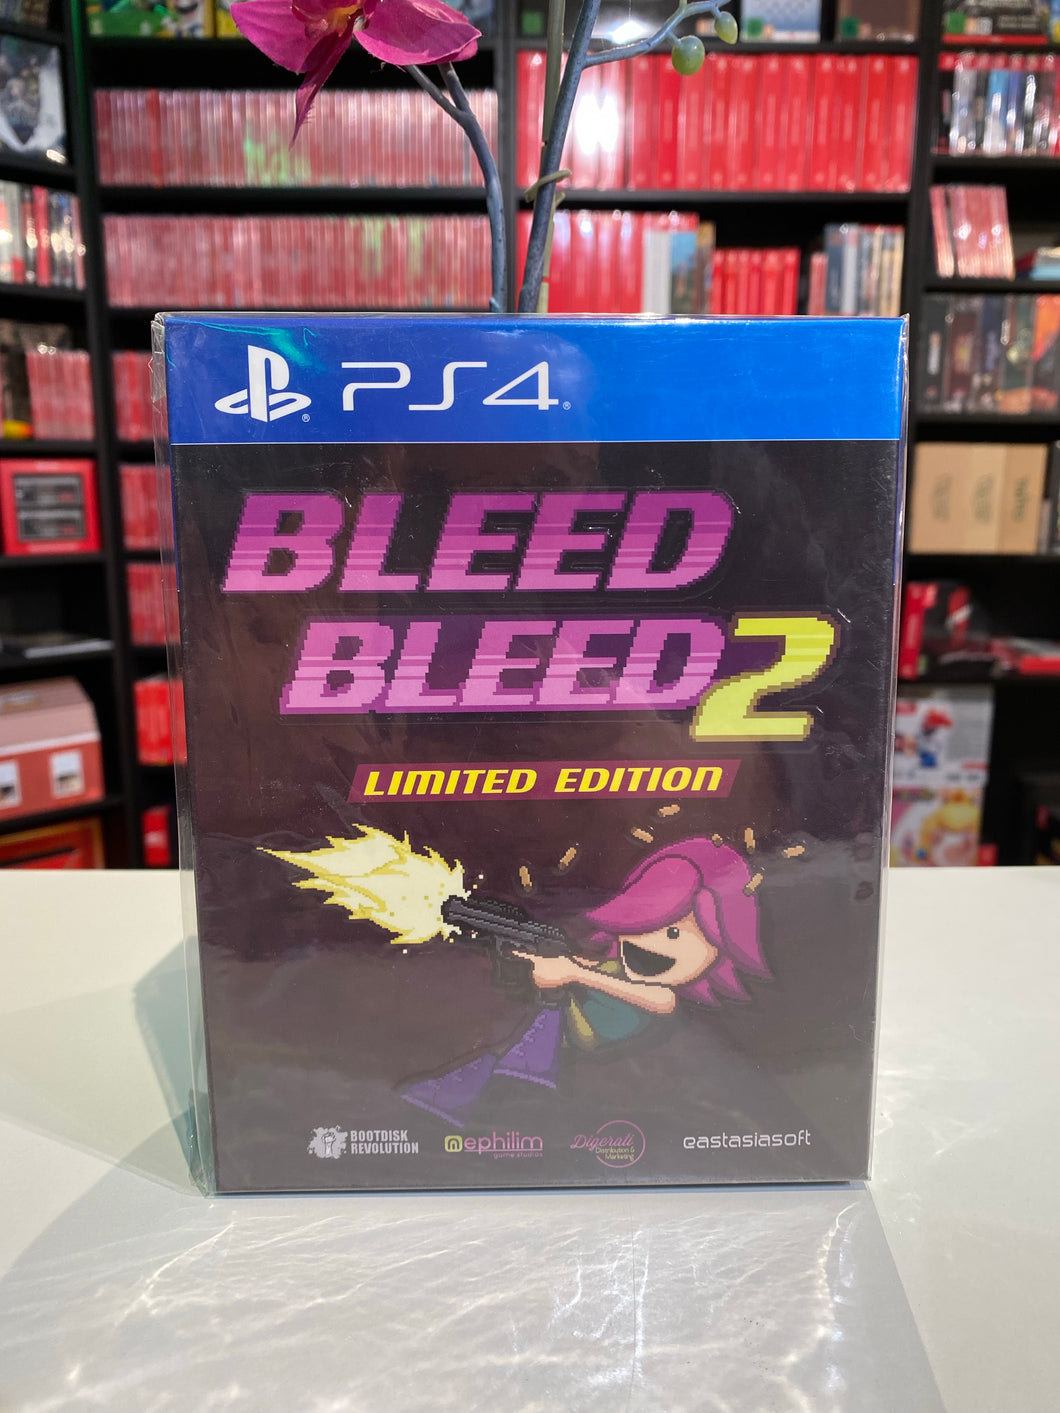 Bleed & bleed 2 limited edition / eastasiasoft / PS4